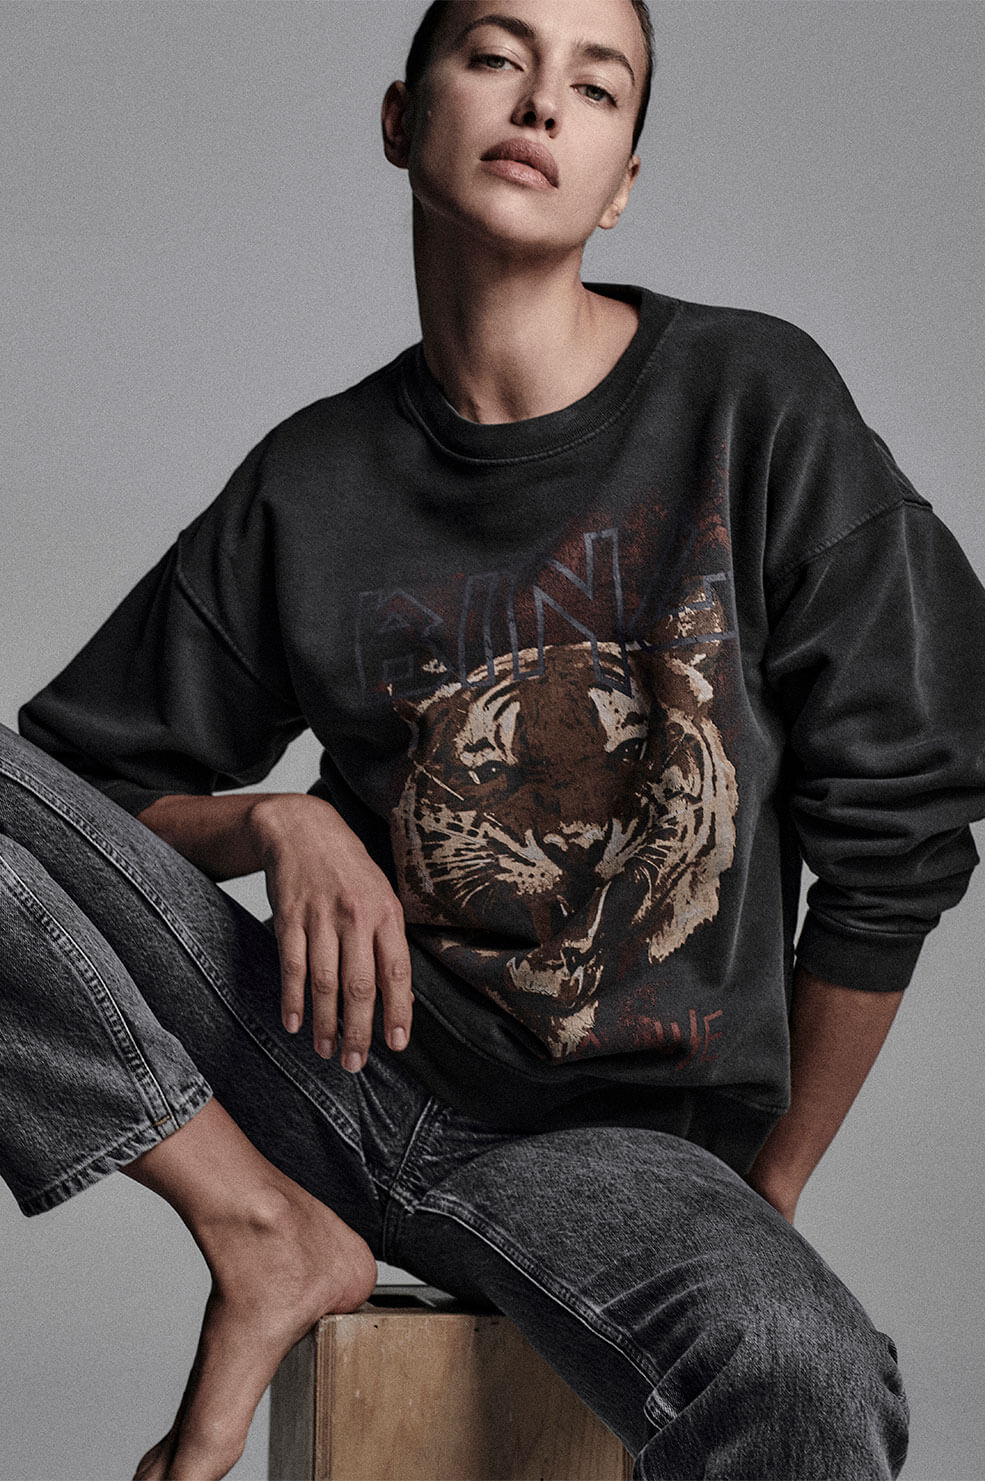 Fabiani - ✨JUST ARRIVED✨ The ANINE BING Tiger sweatshirt - as